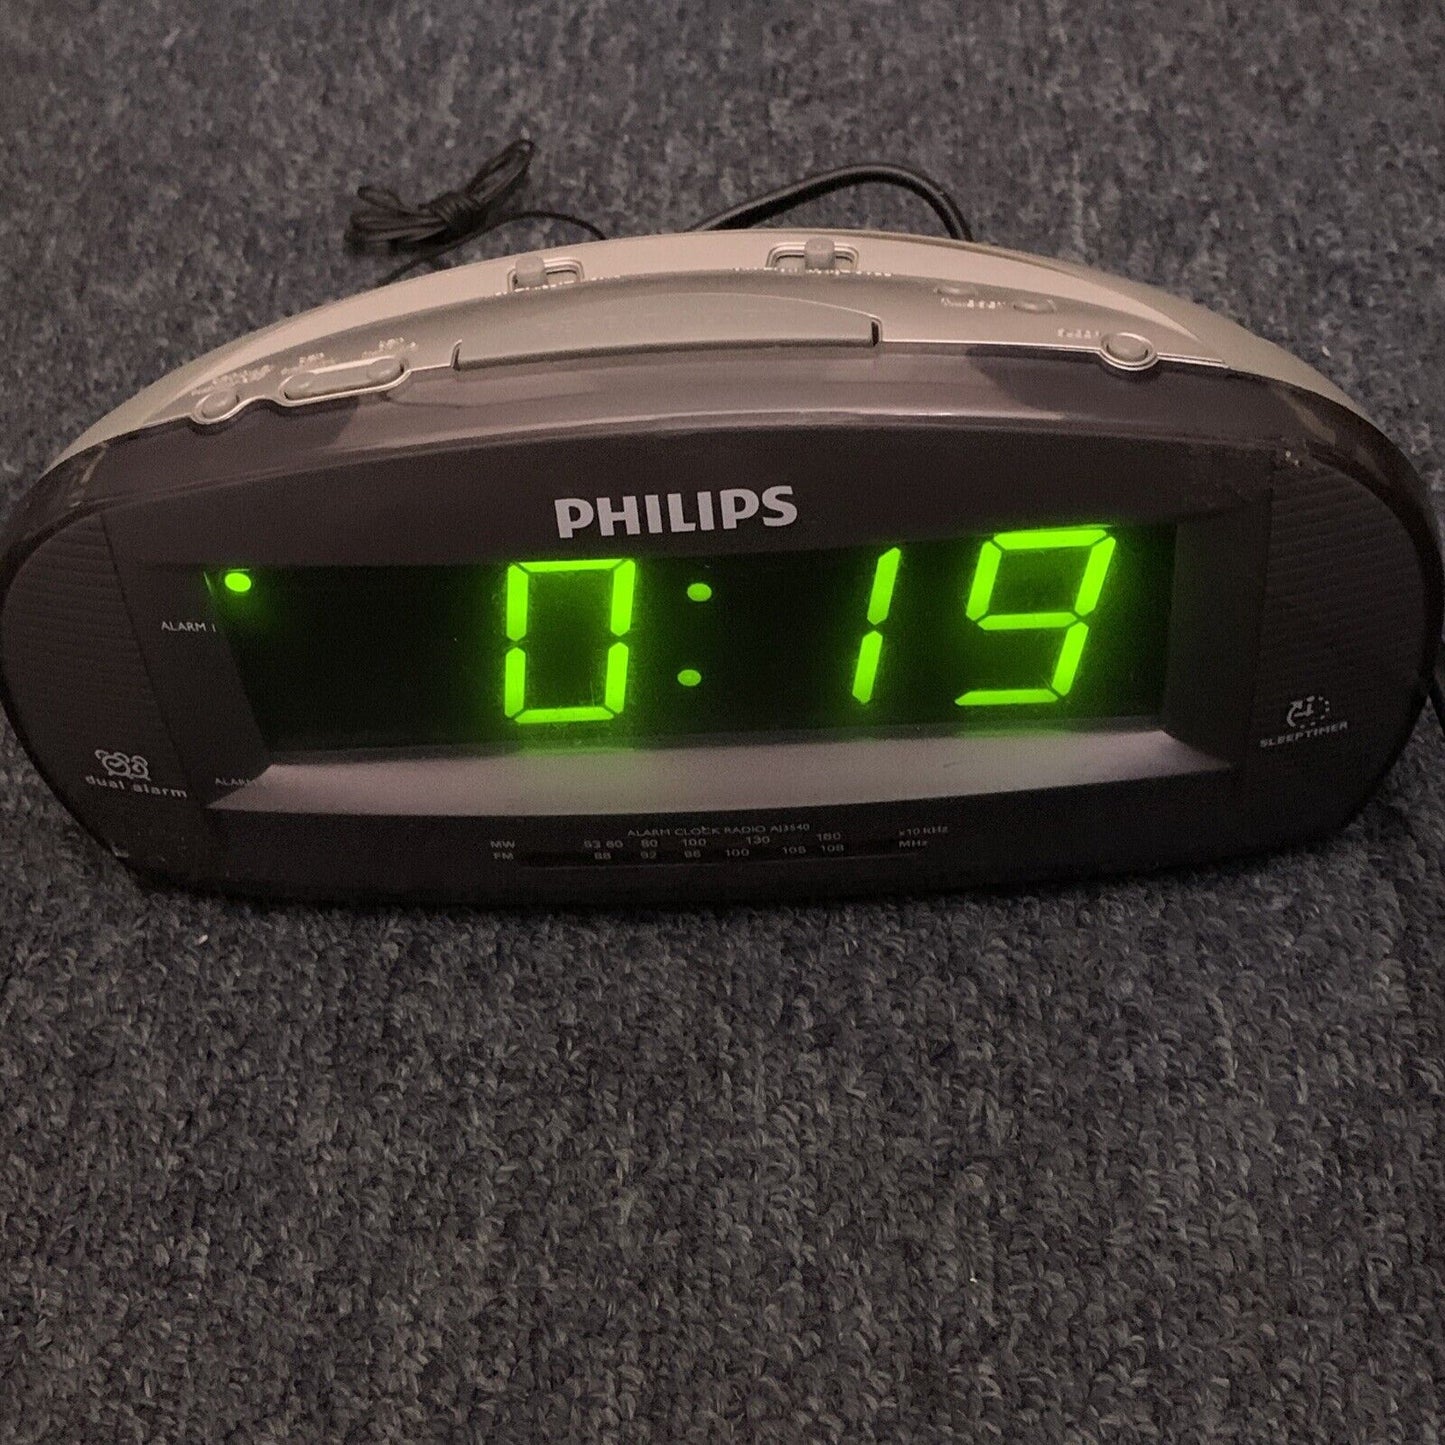 Philips Dual Alarm Clock AJ3540/79 Big Display AM/FM with Snooze Function